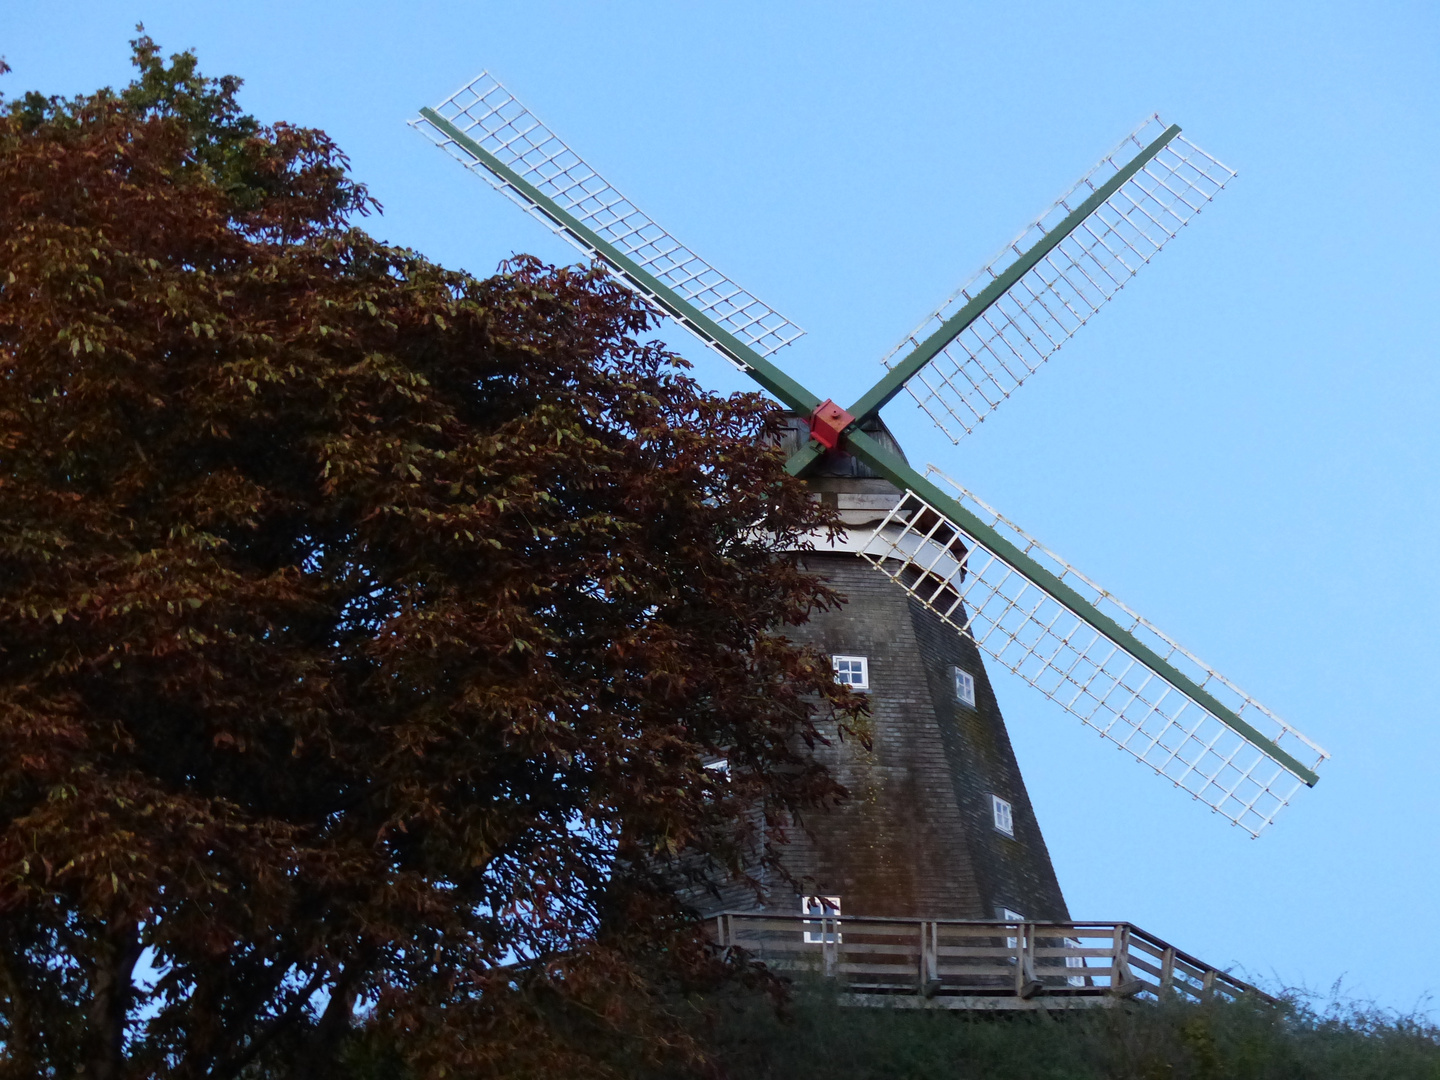 Röbeler Windmühle